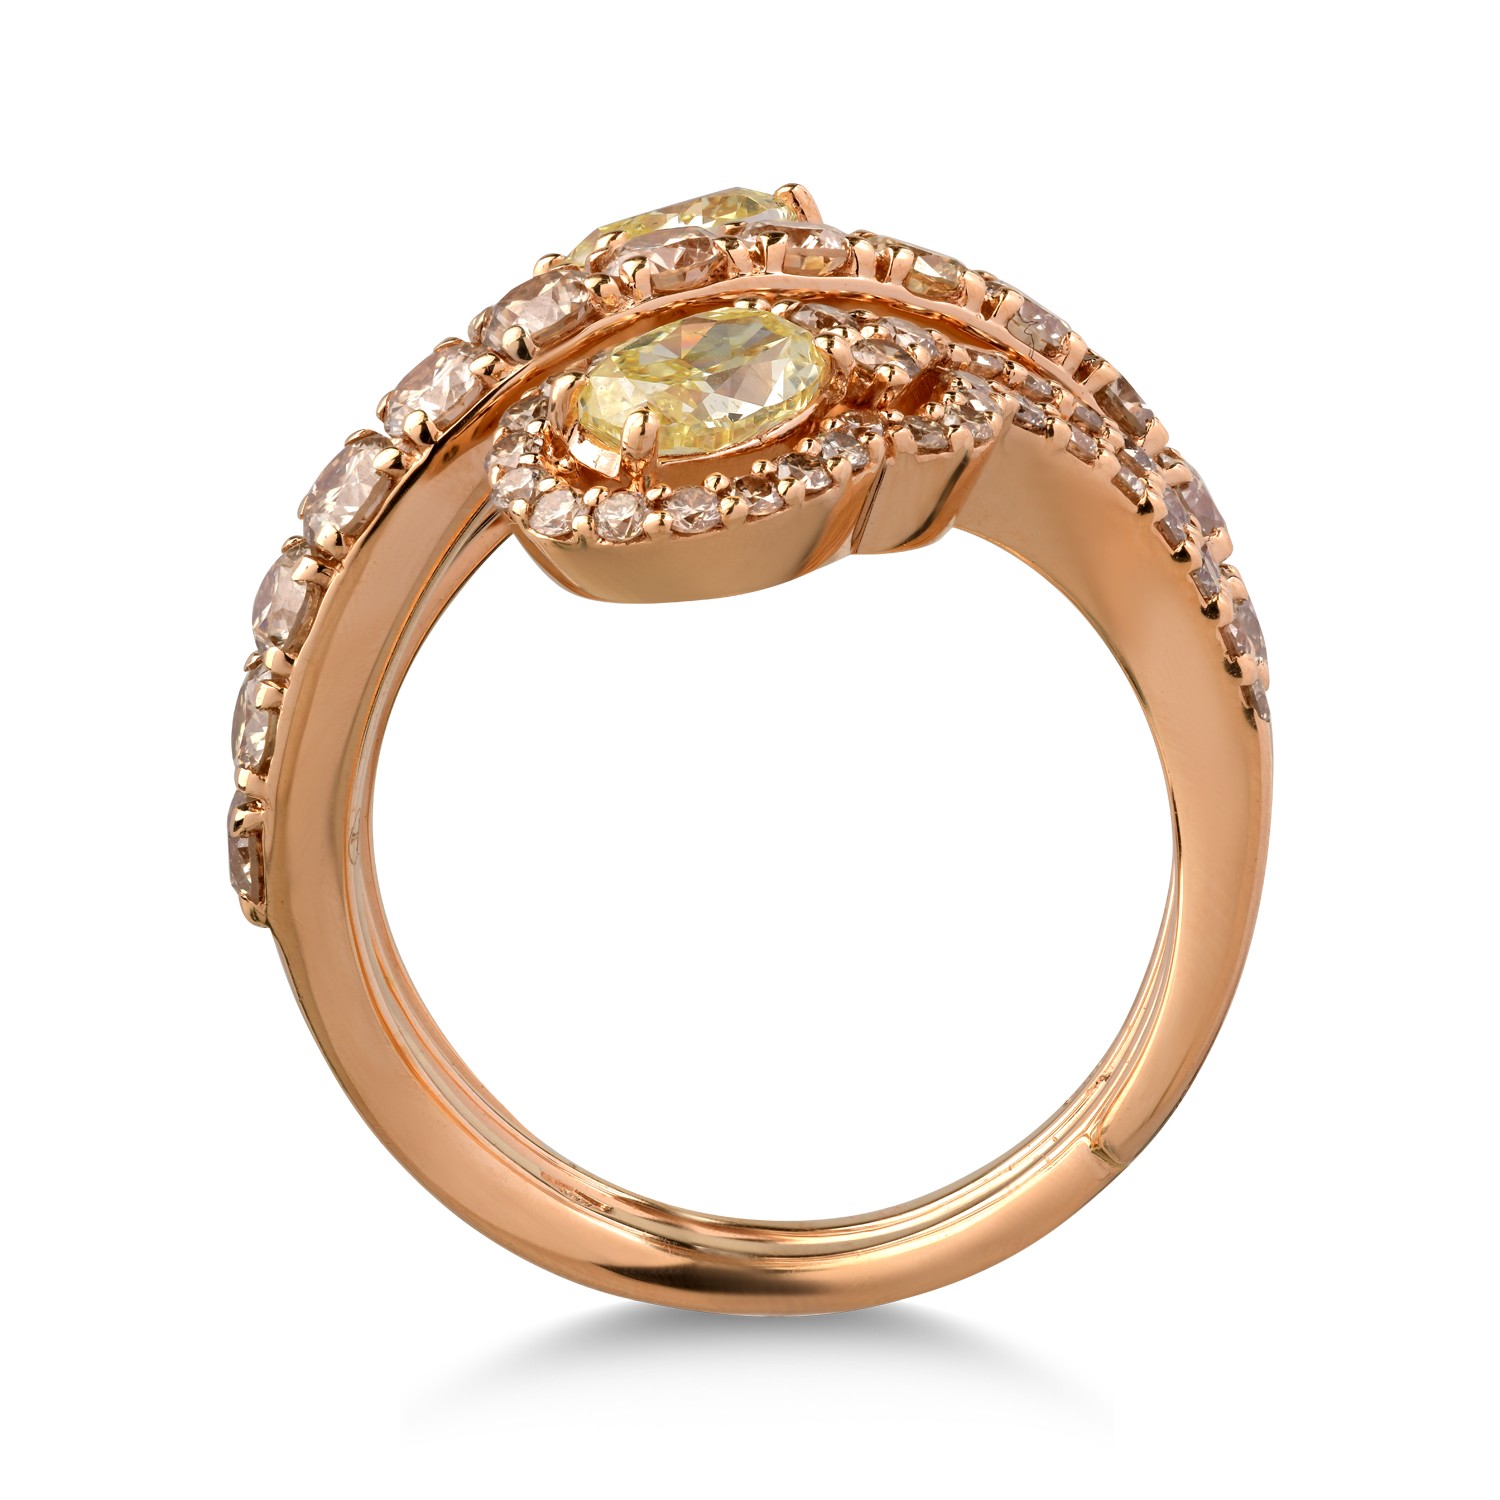 Inel din aur roz de 18K cu diamante fancy-galbene de 1.01ct si diamante maro de 1.94ct